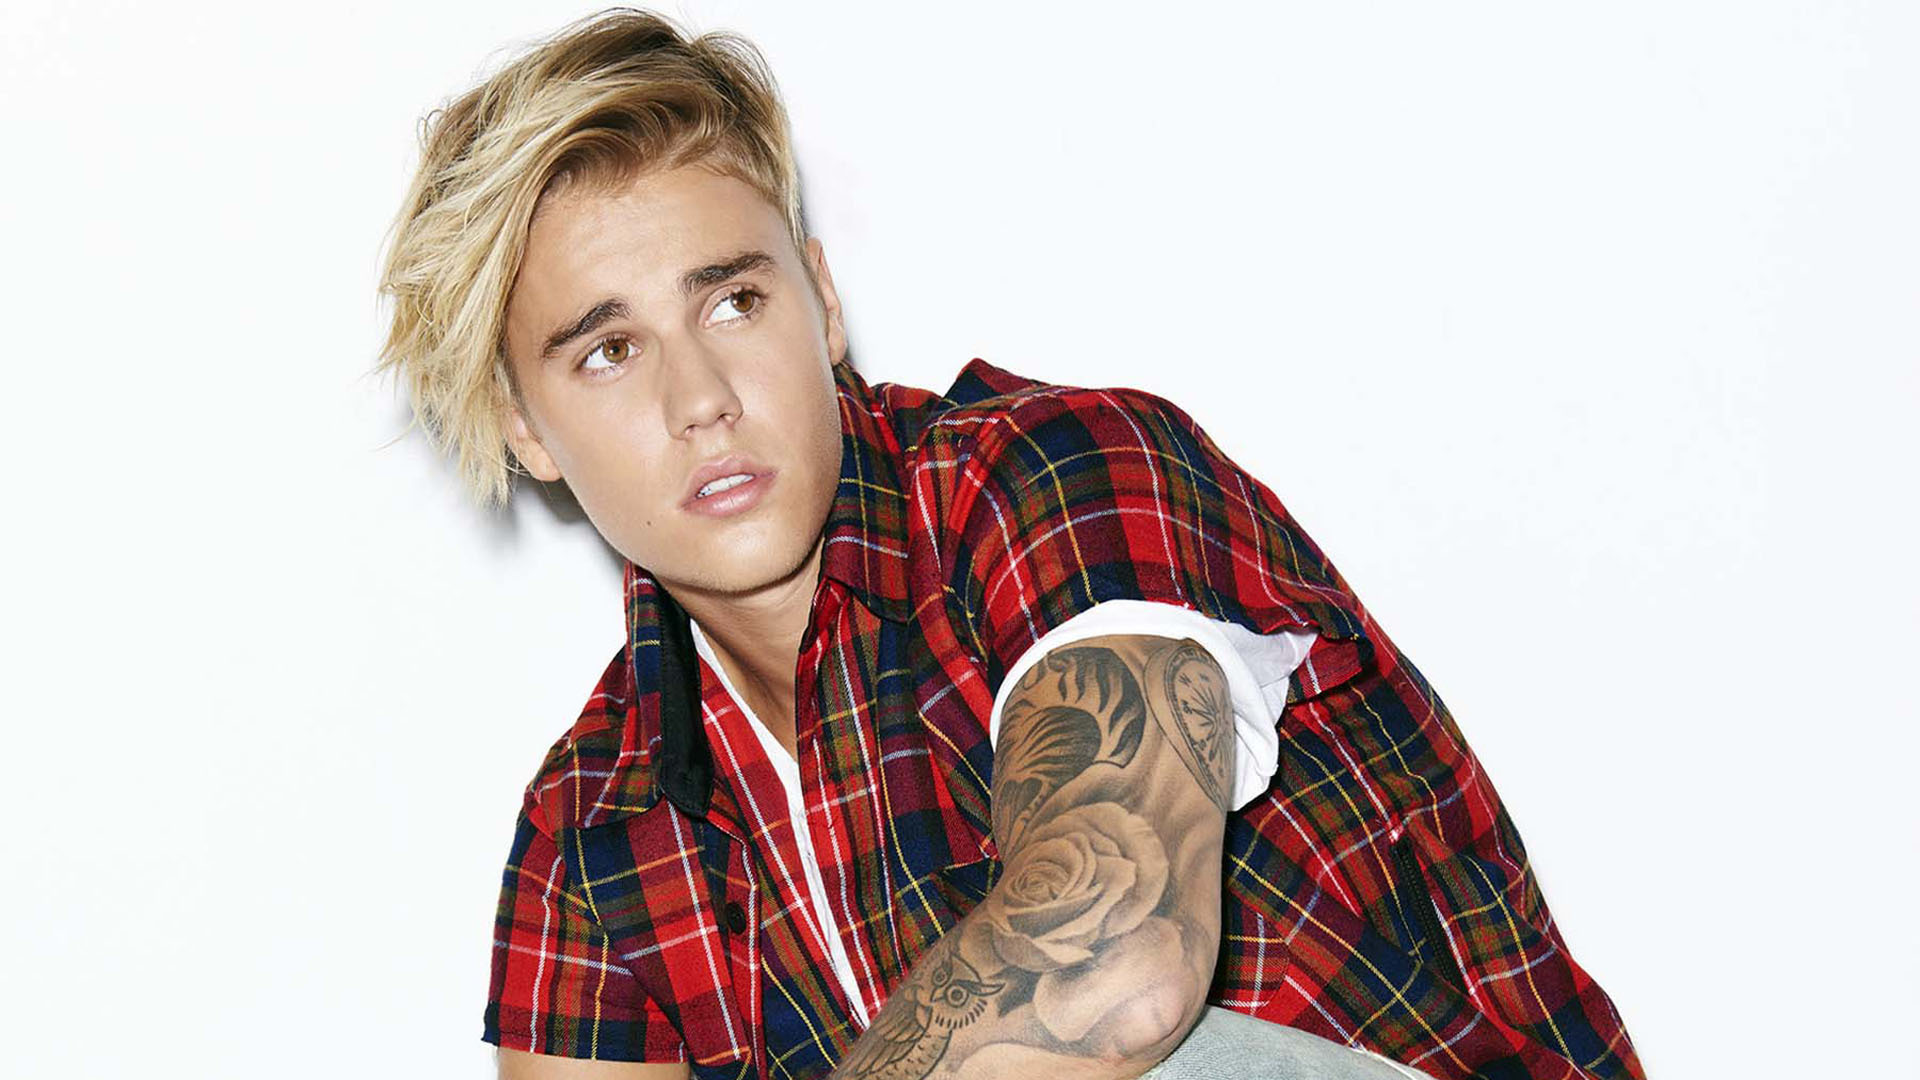 Justin Bieber Wallpapers Download1920 x 1080